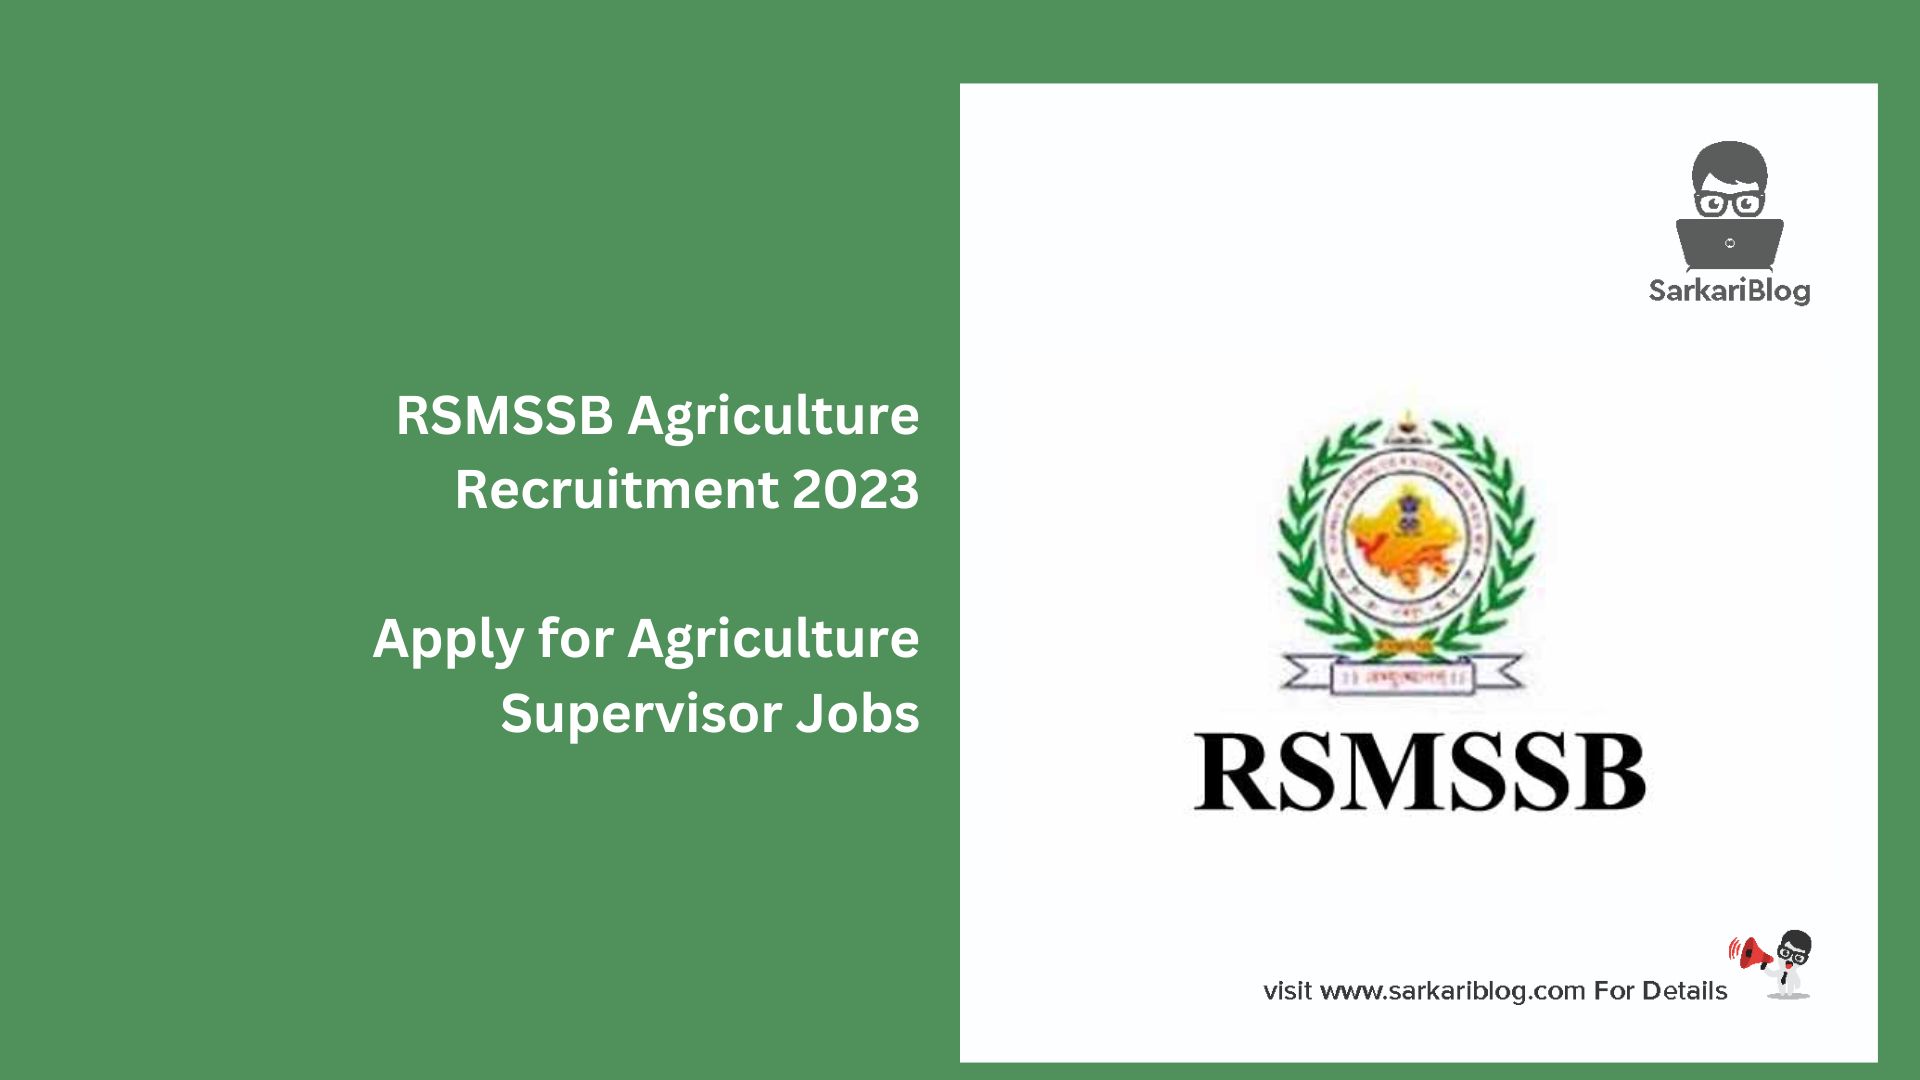 RSMSSB Agriculture Recruitment 2023